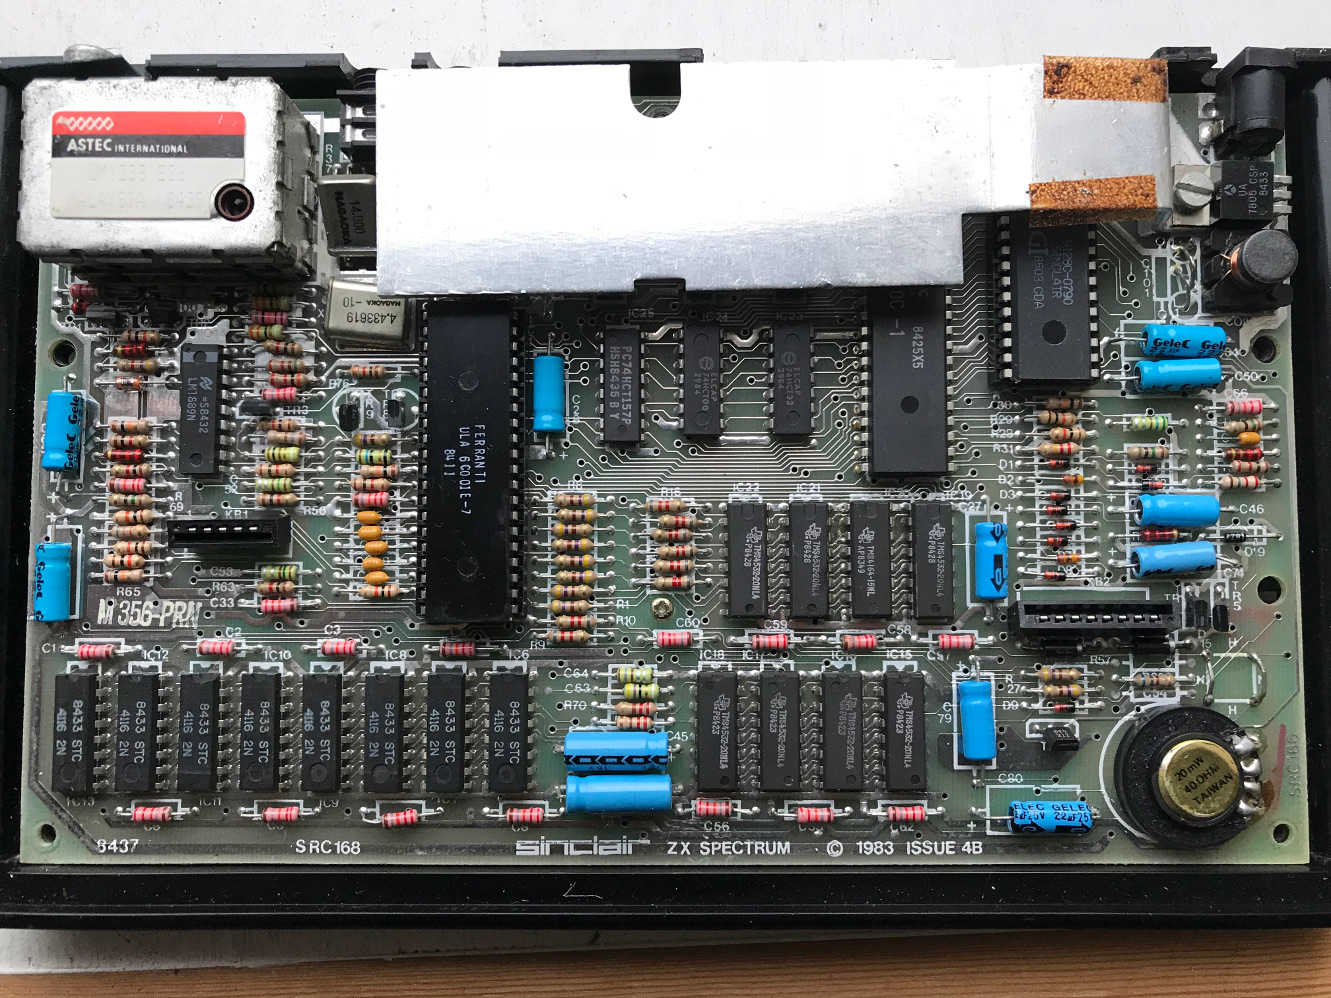 Sinclair ZX Spectrum - 48k Issue 4B Motherboard